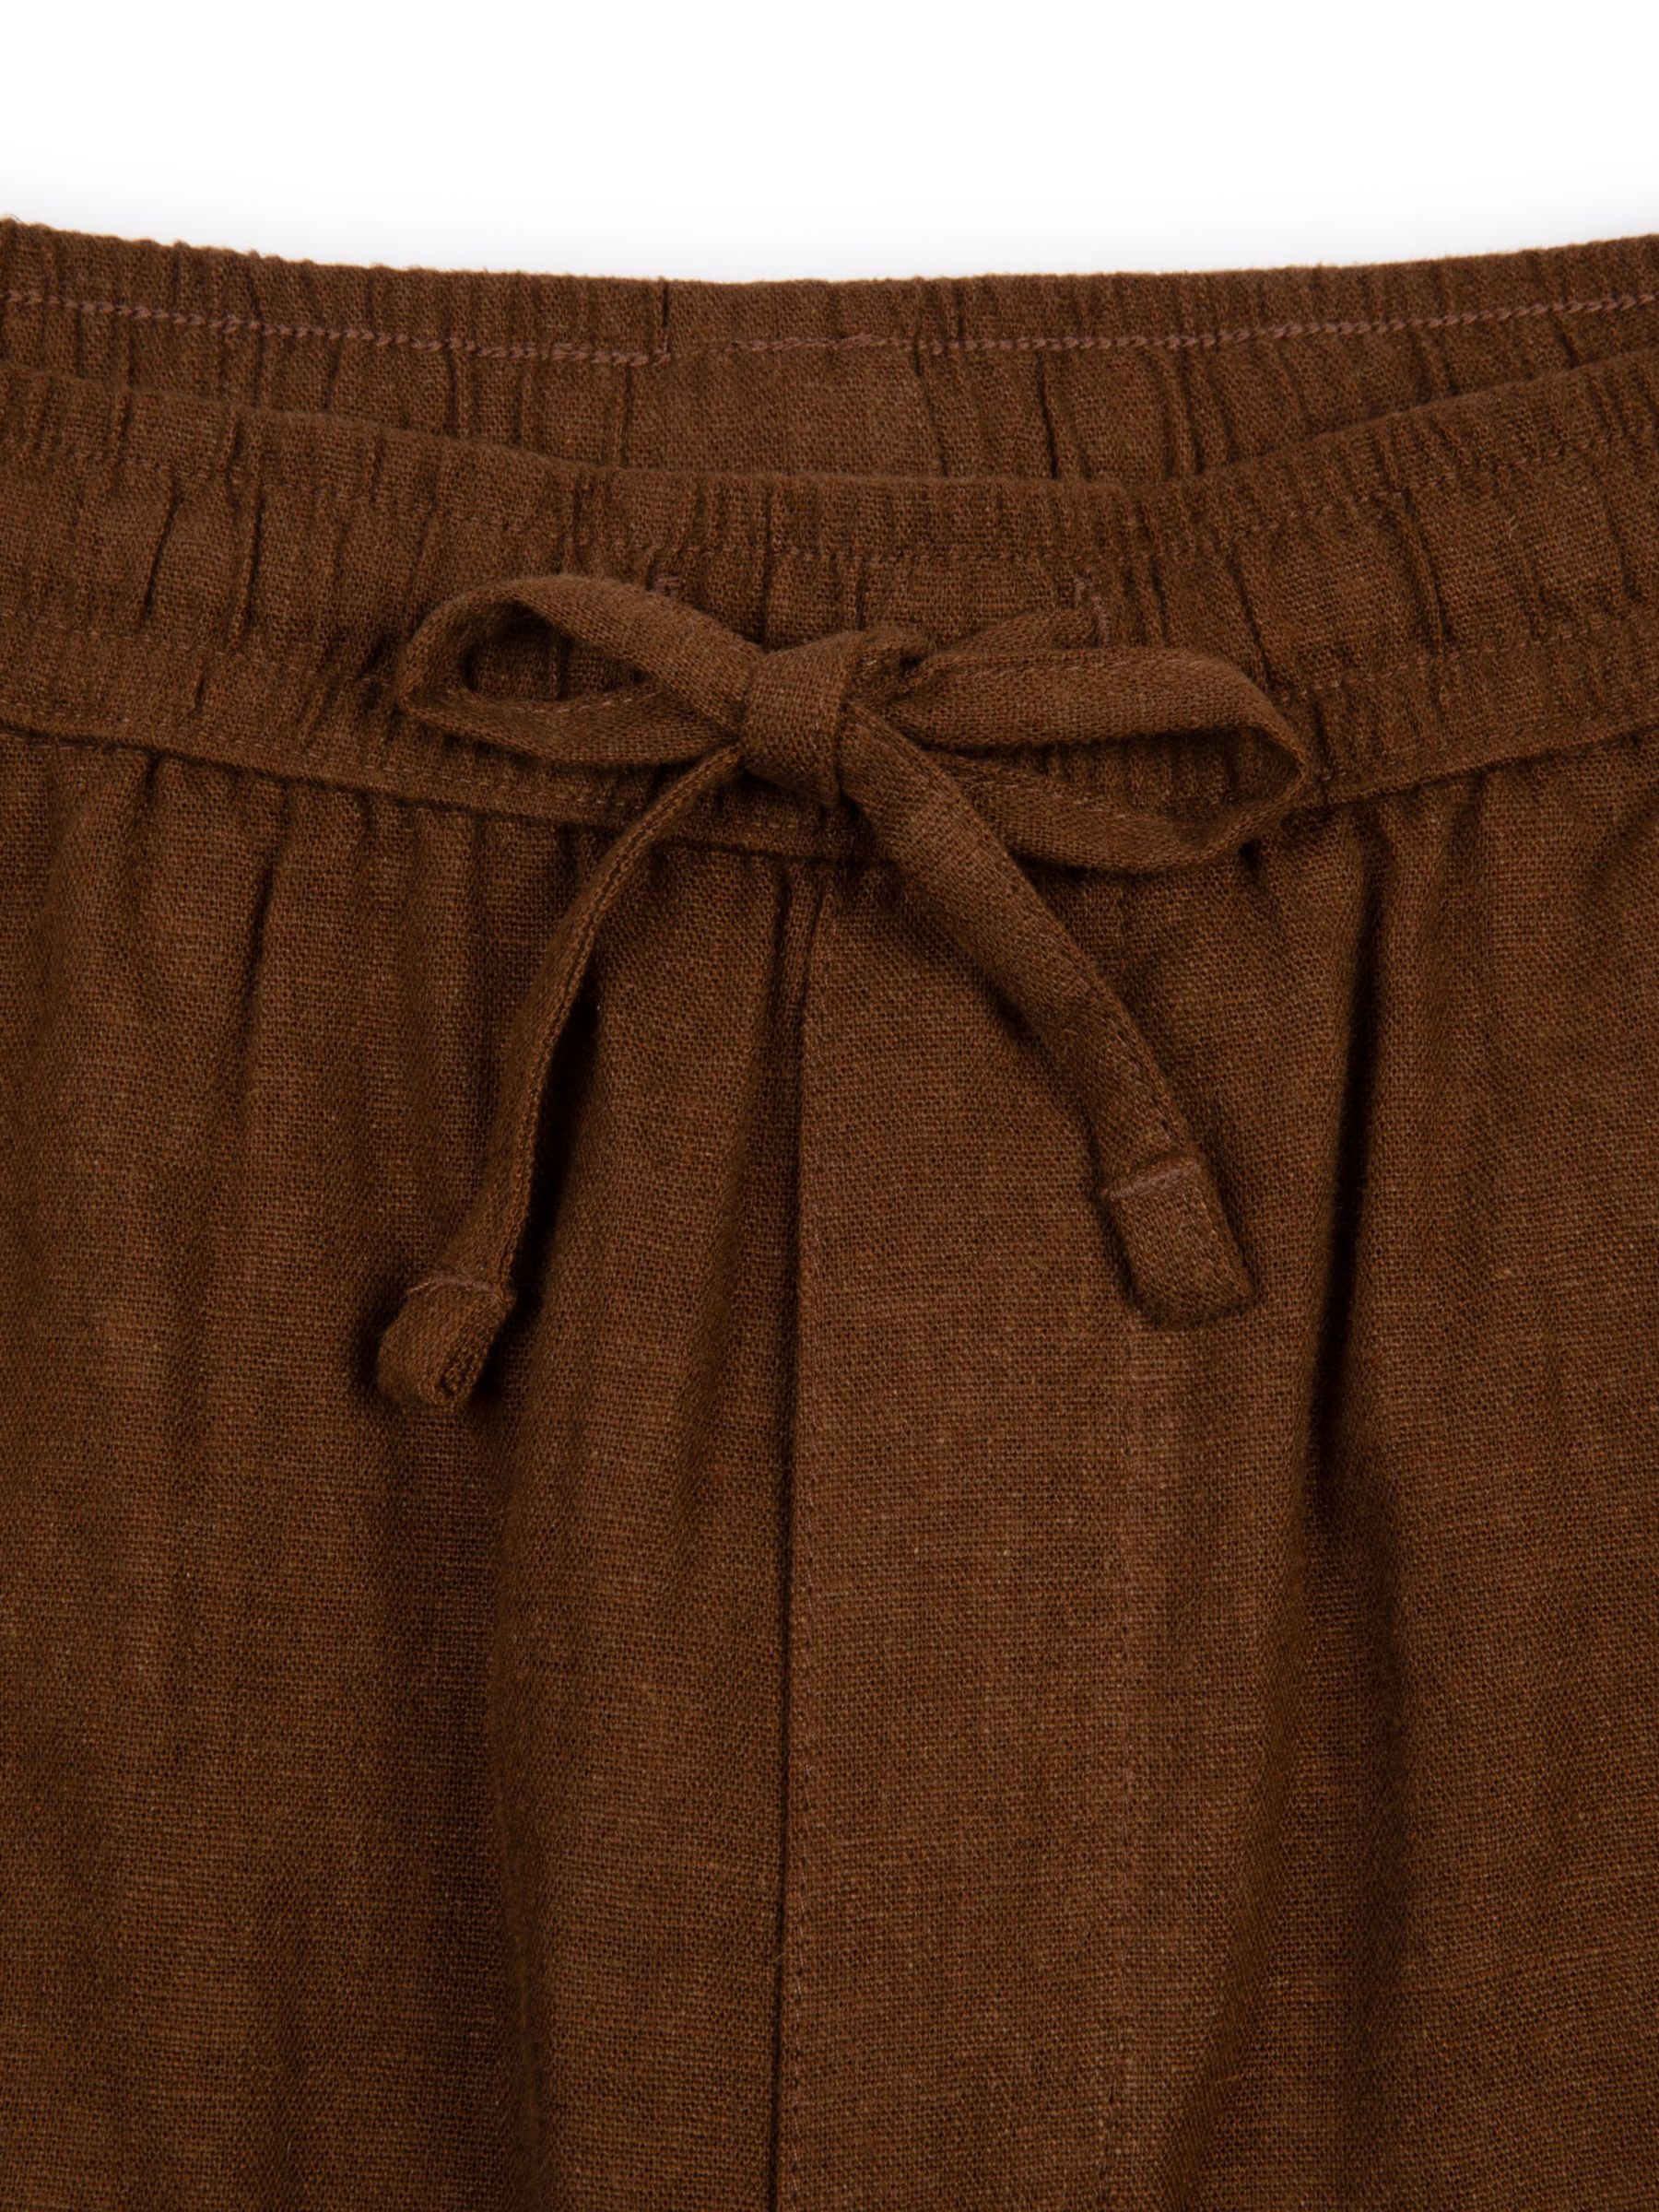 Buy Chelsea Peers Linen Blend Shorts Online at johnlewis.com